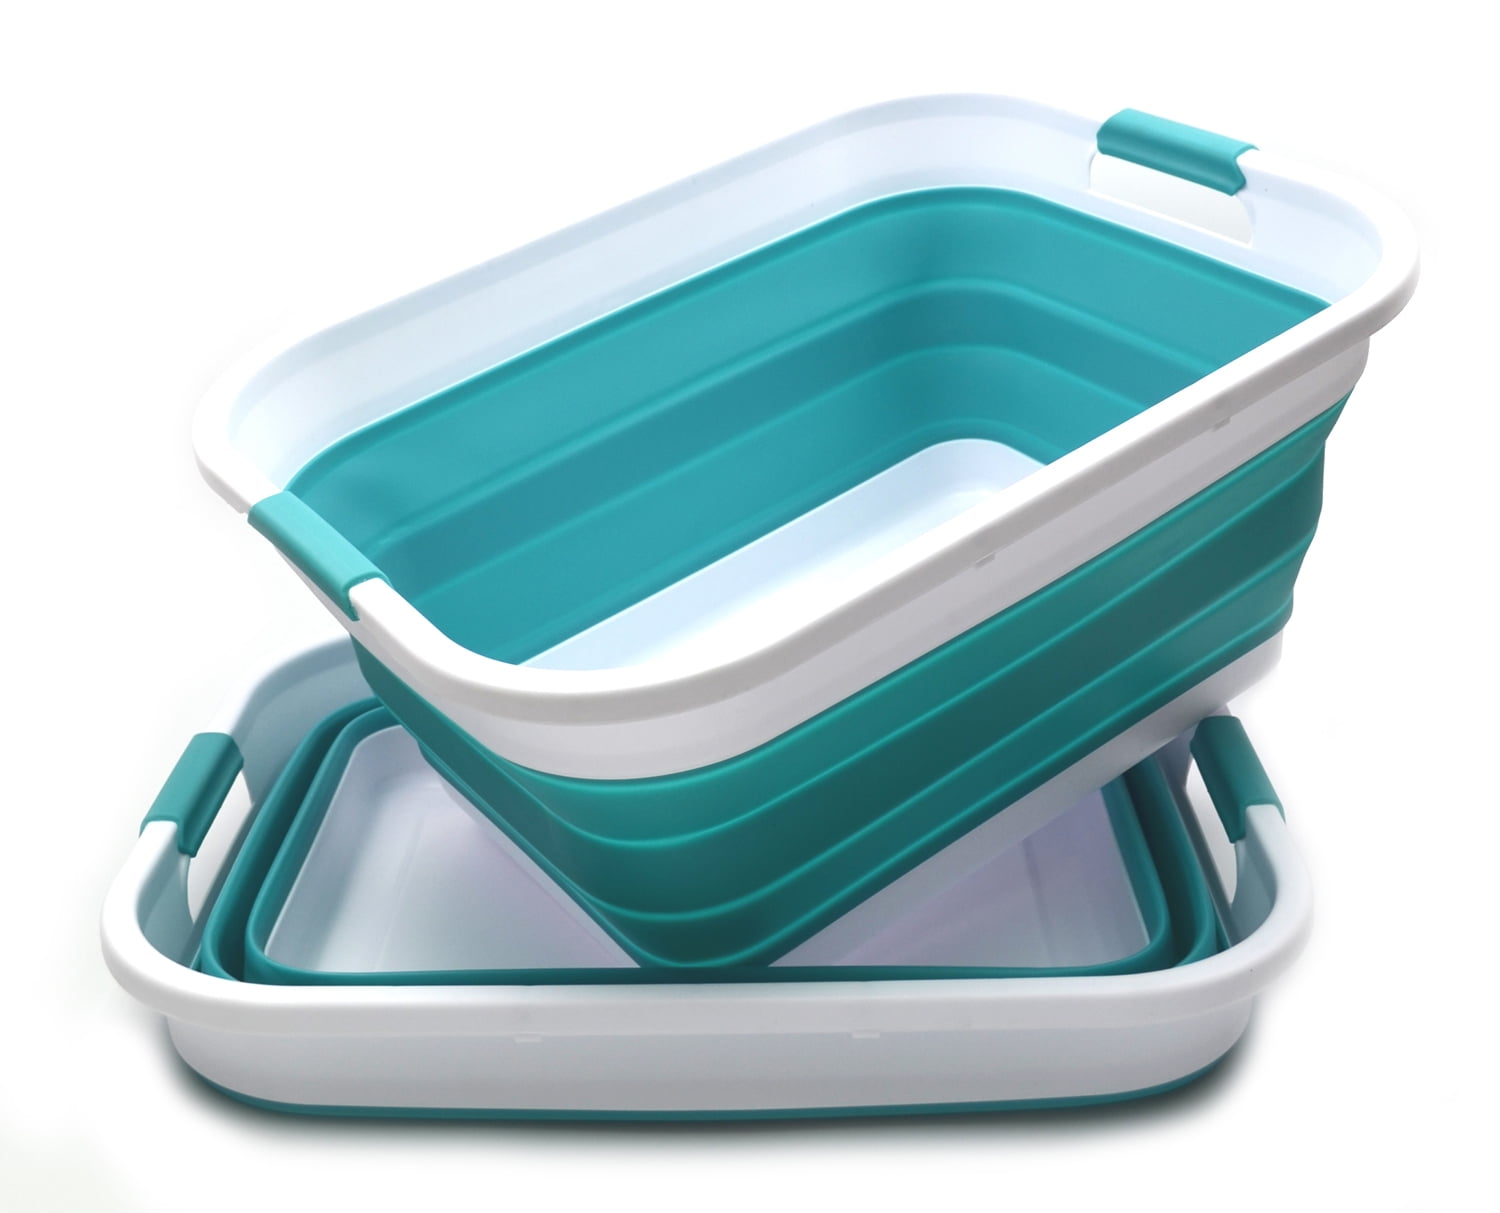 Oval Tub/Basket Space Saving Laundry Hamper Grey/Bright Blue, 1 SAMMART Collapsible Plastic Laundry Basket Portable Washing Tub Foldable Storage Container/Organizer 